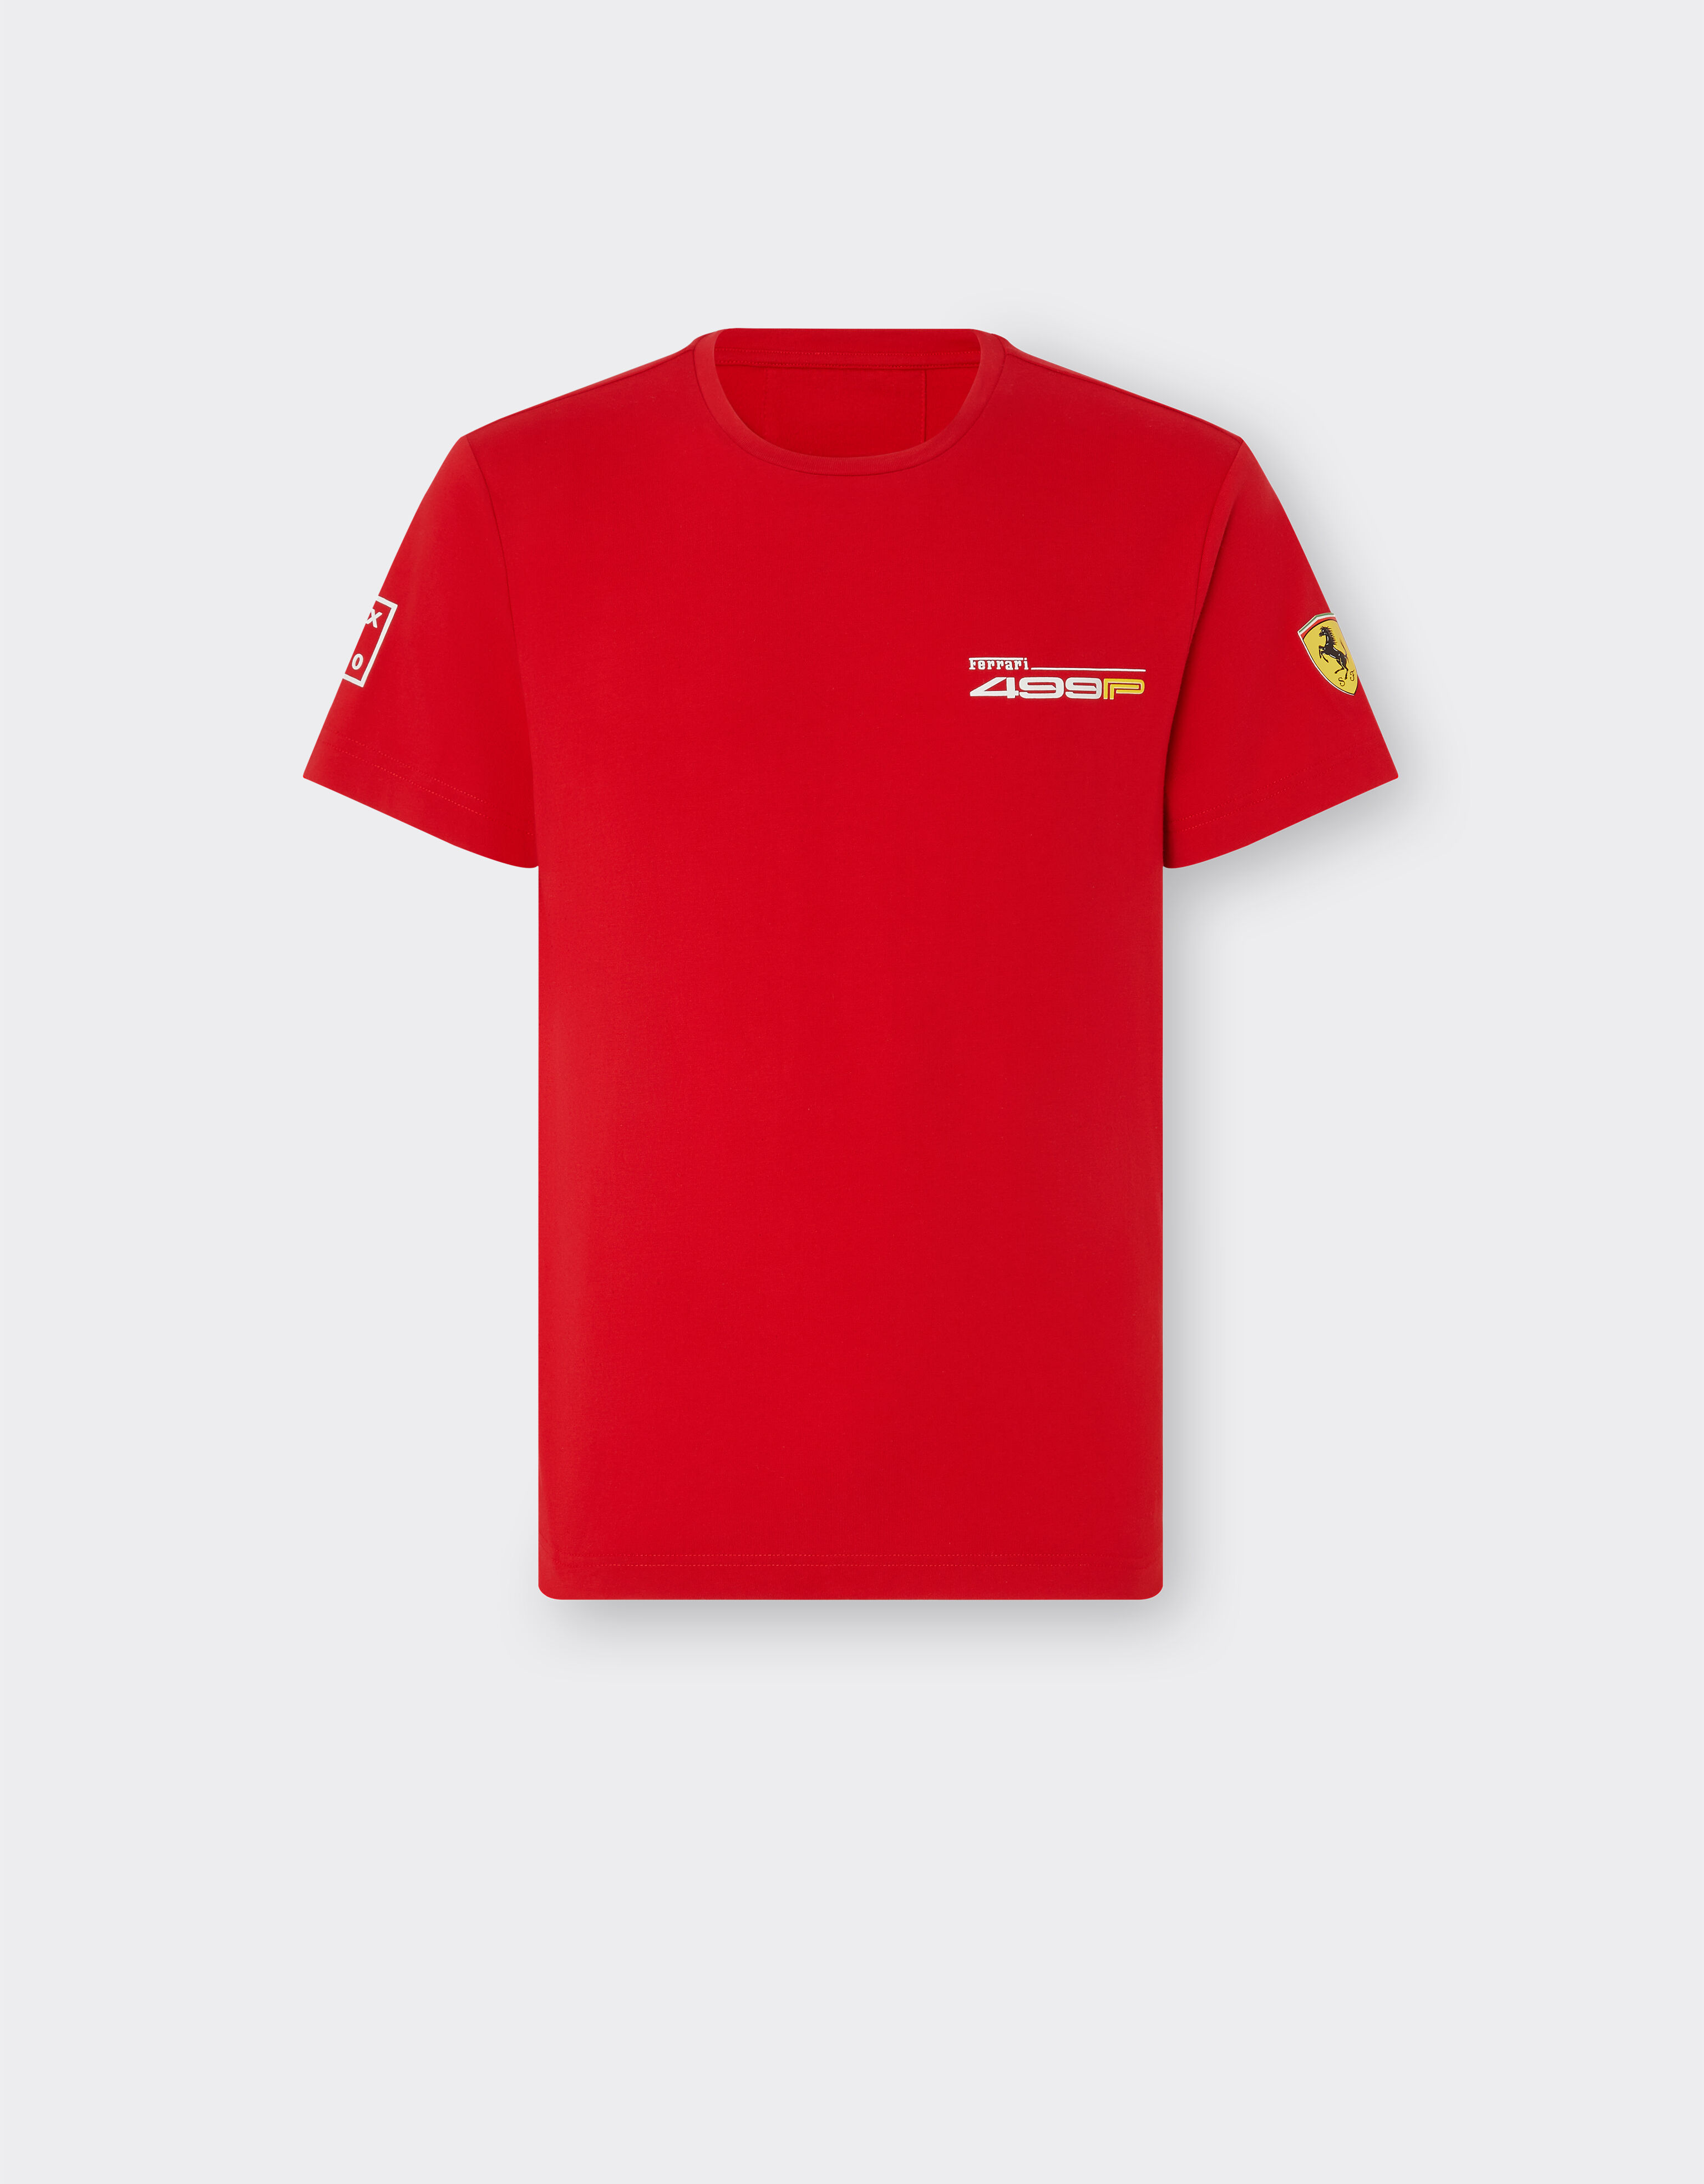 Ferrari Ferrari 499P Hypercar T-shirt Red F1317f